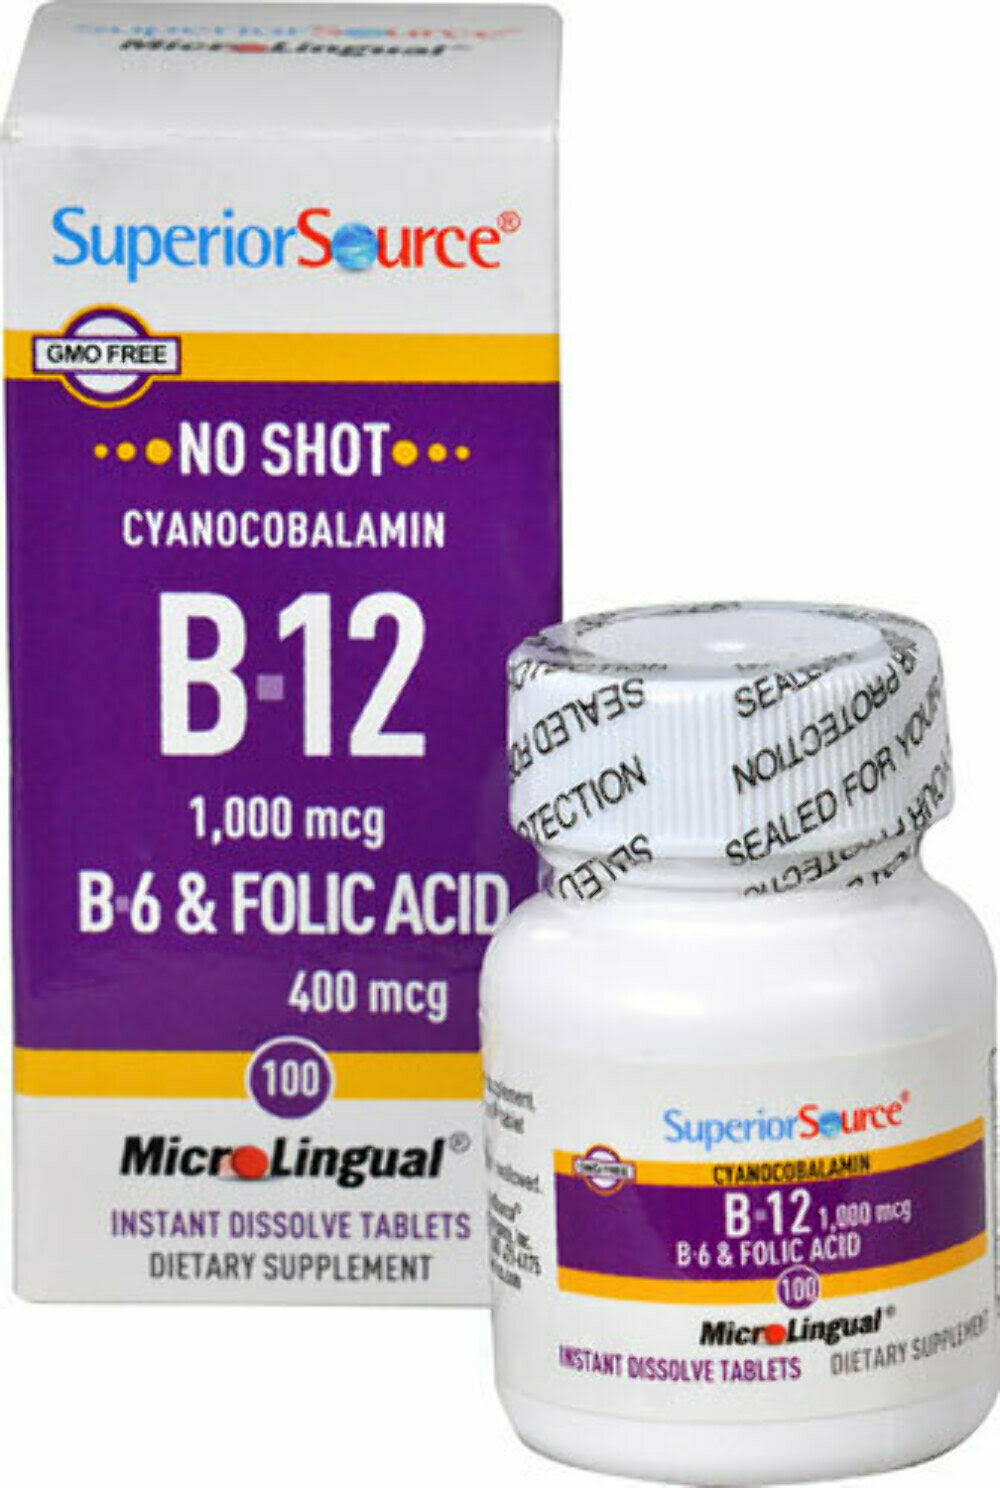 Superior Source No Shot B-12 B6 & Folic Acid - 400mcg, 100 Tablets